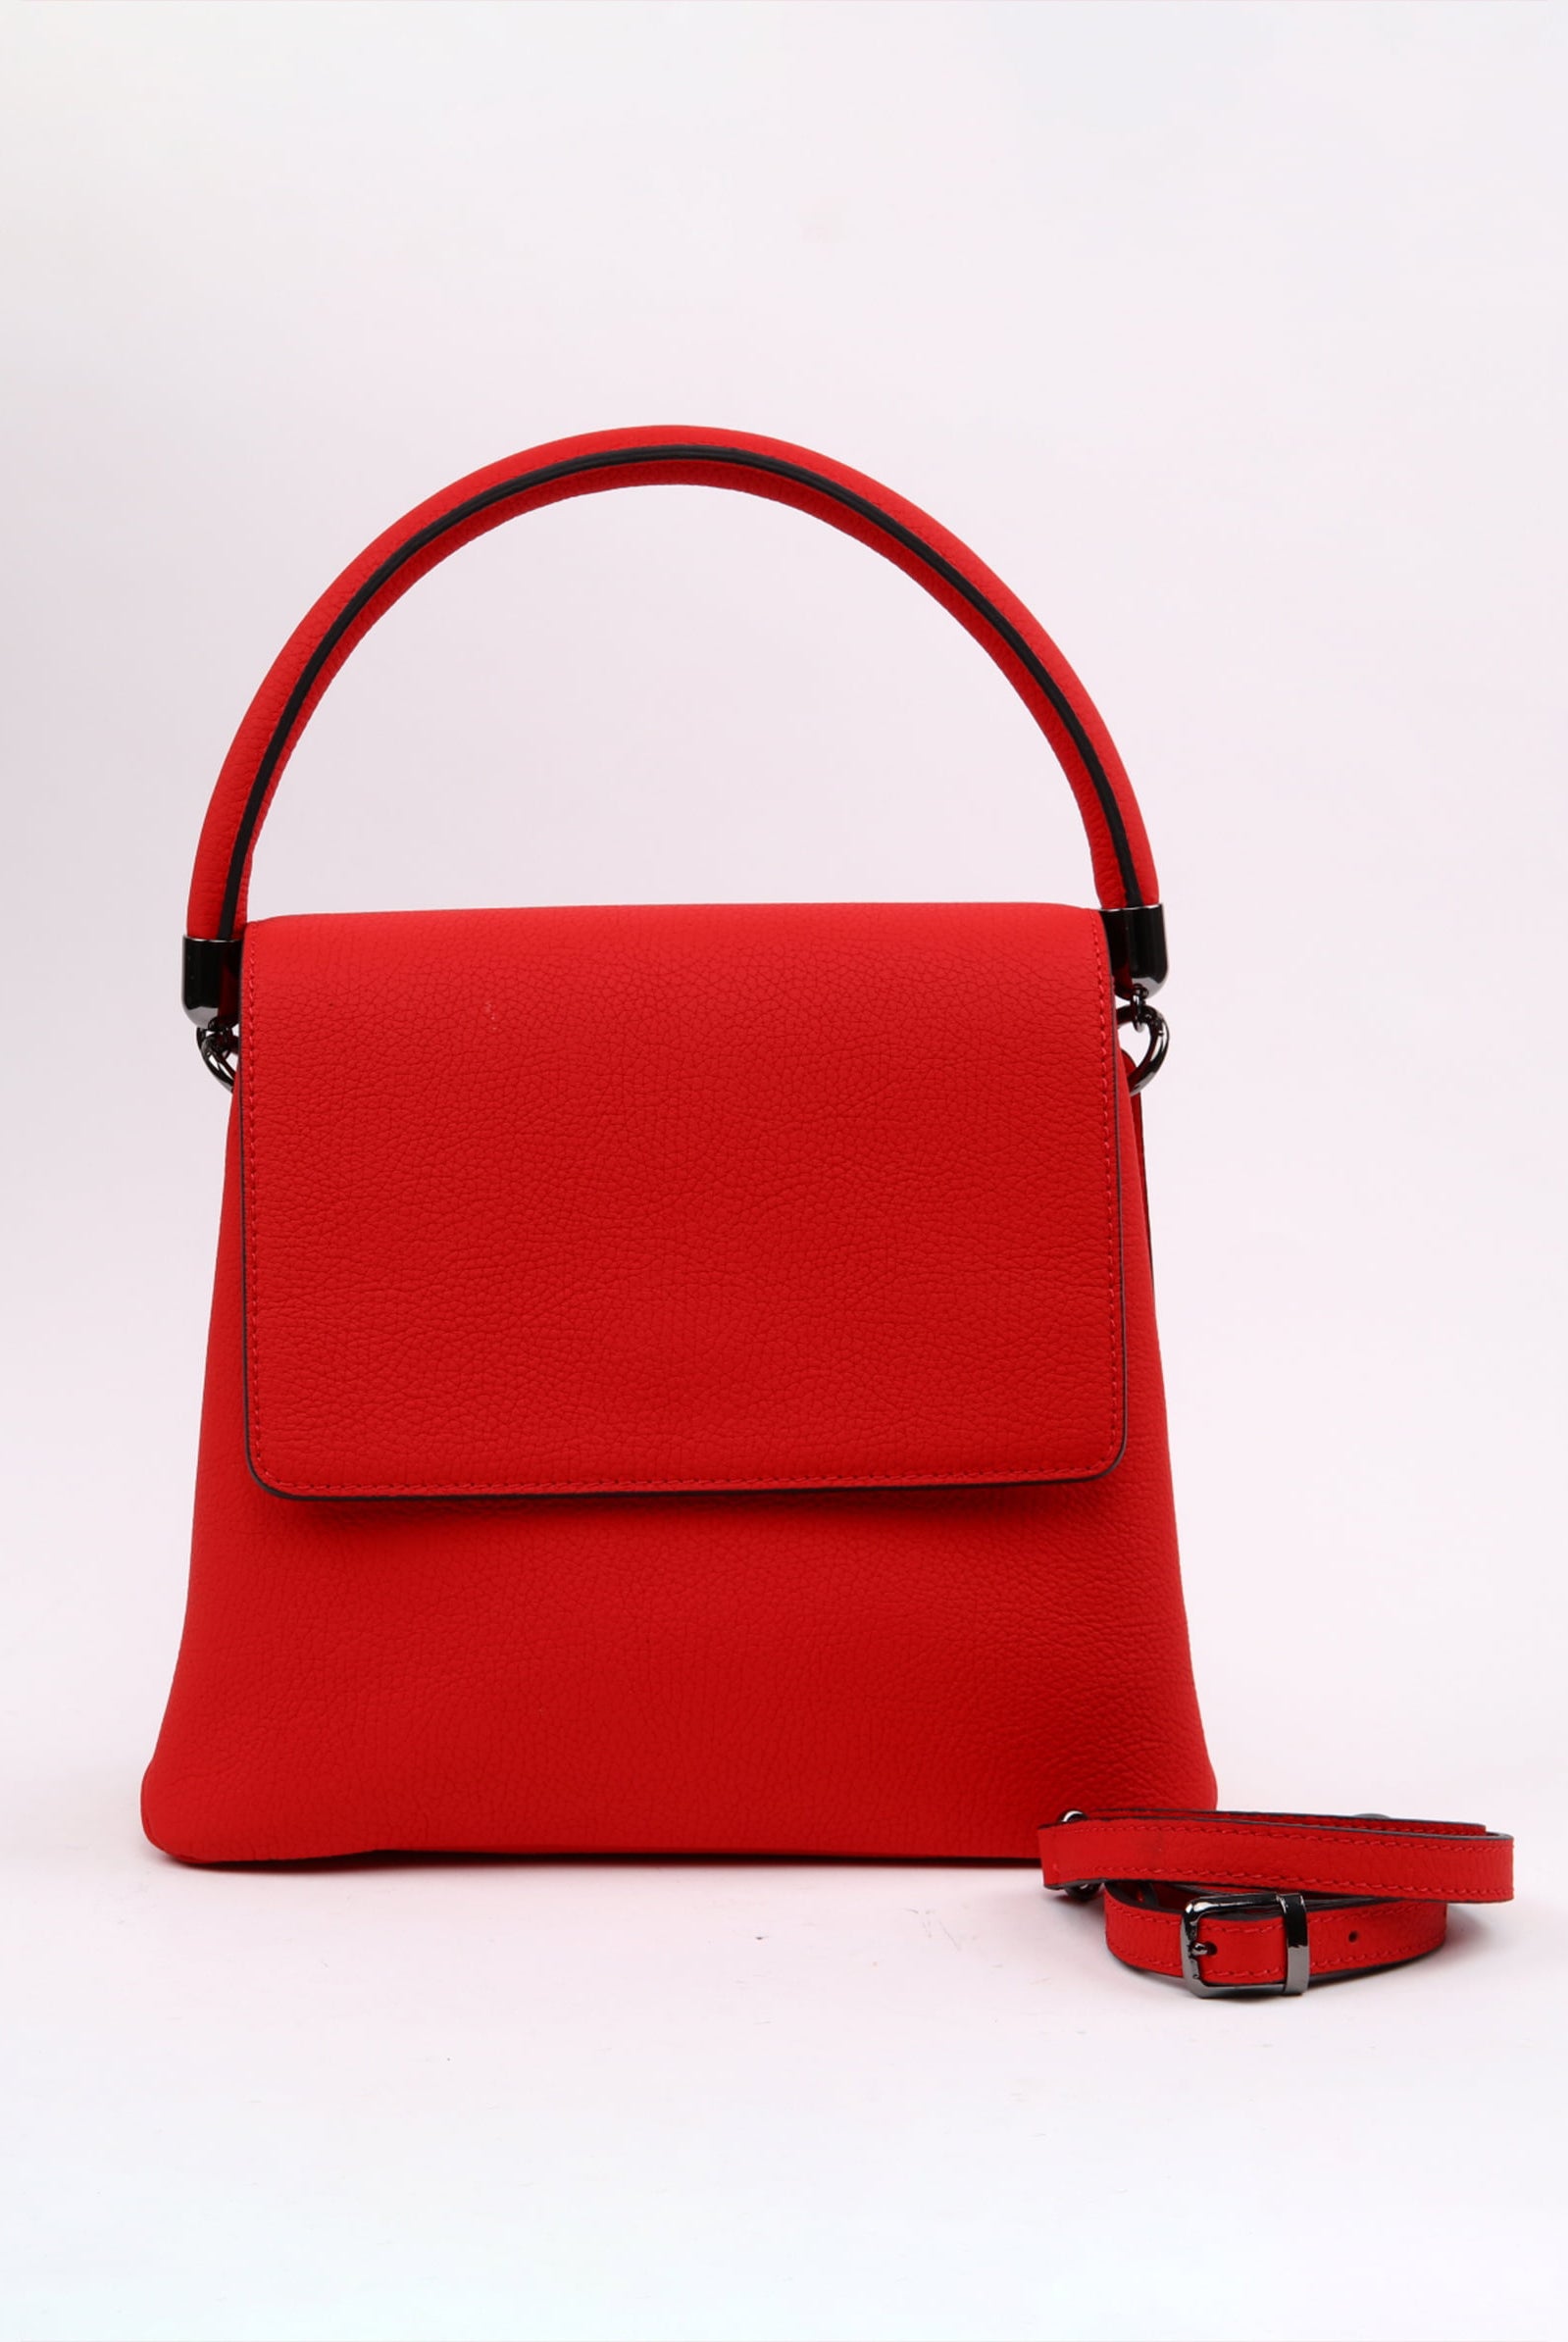 red leather handbag style